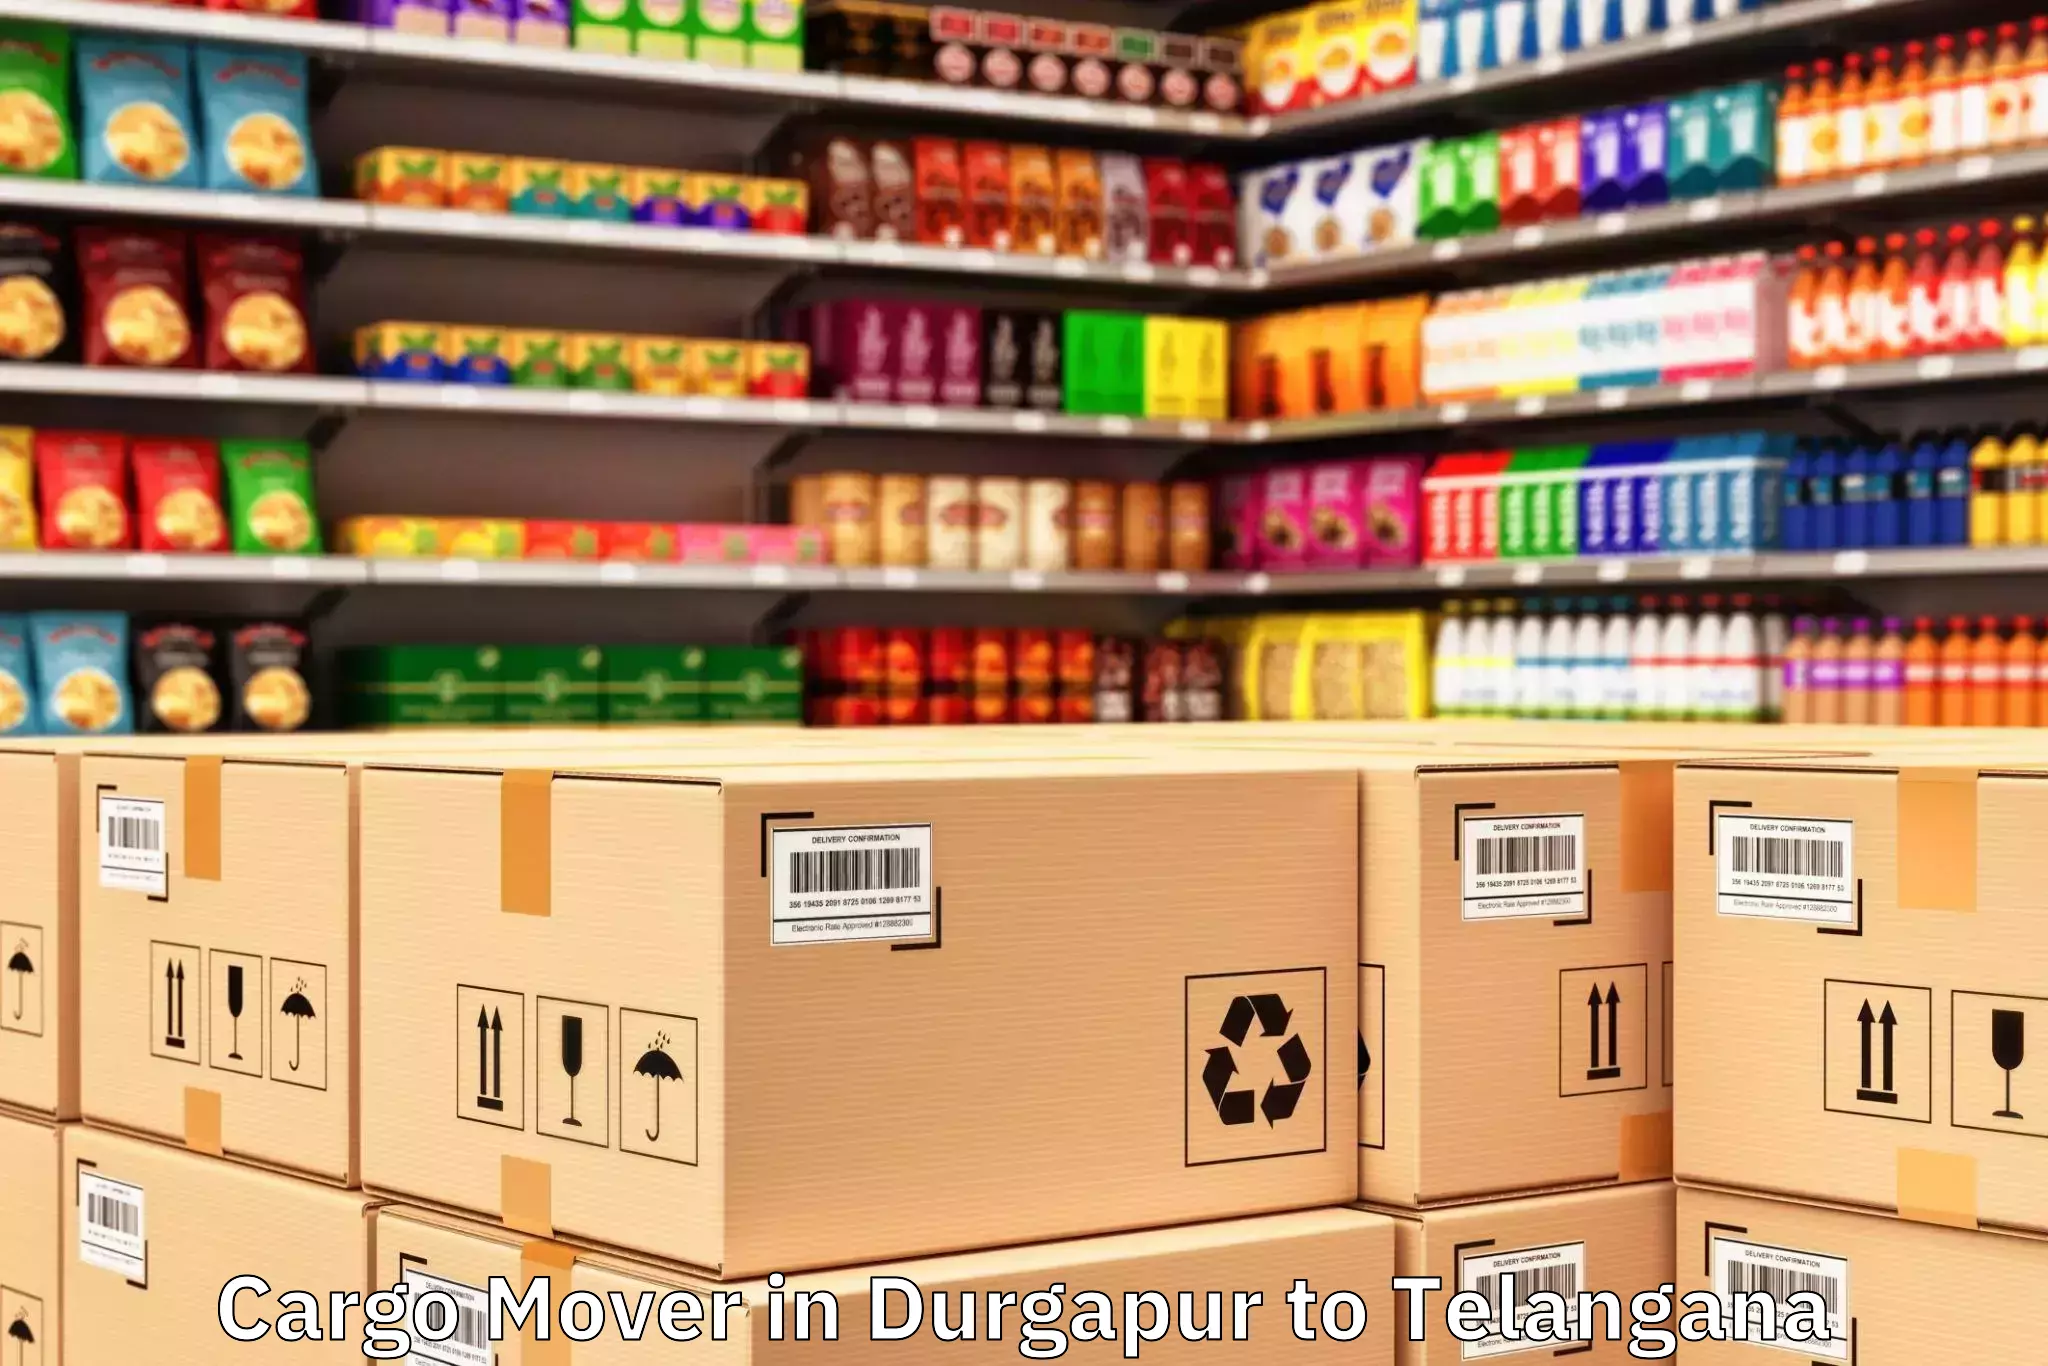 Trusted Durgapur to Dharmaram Cargo Mover